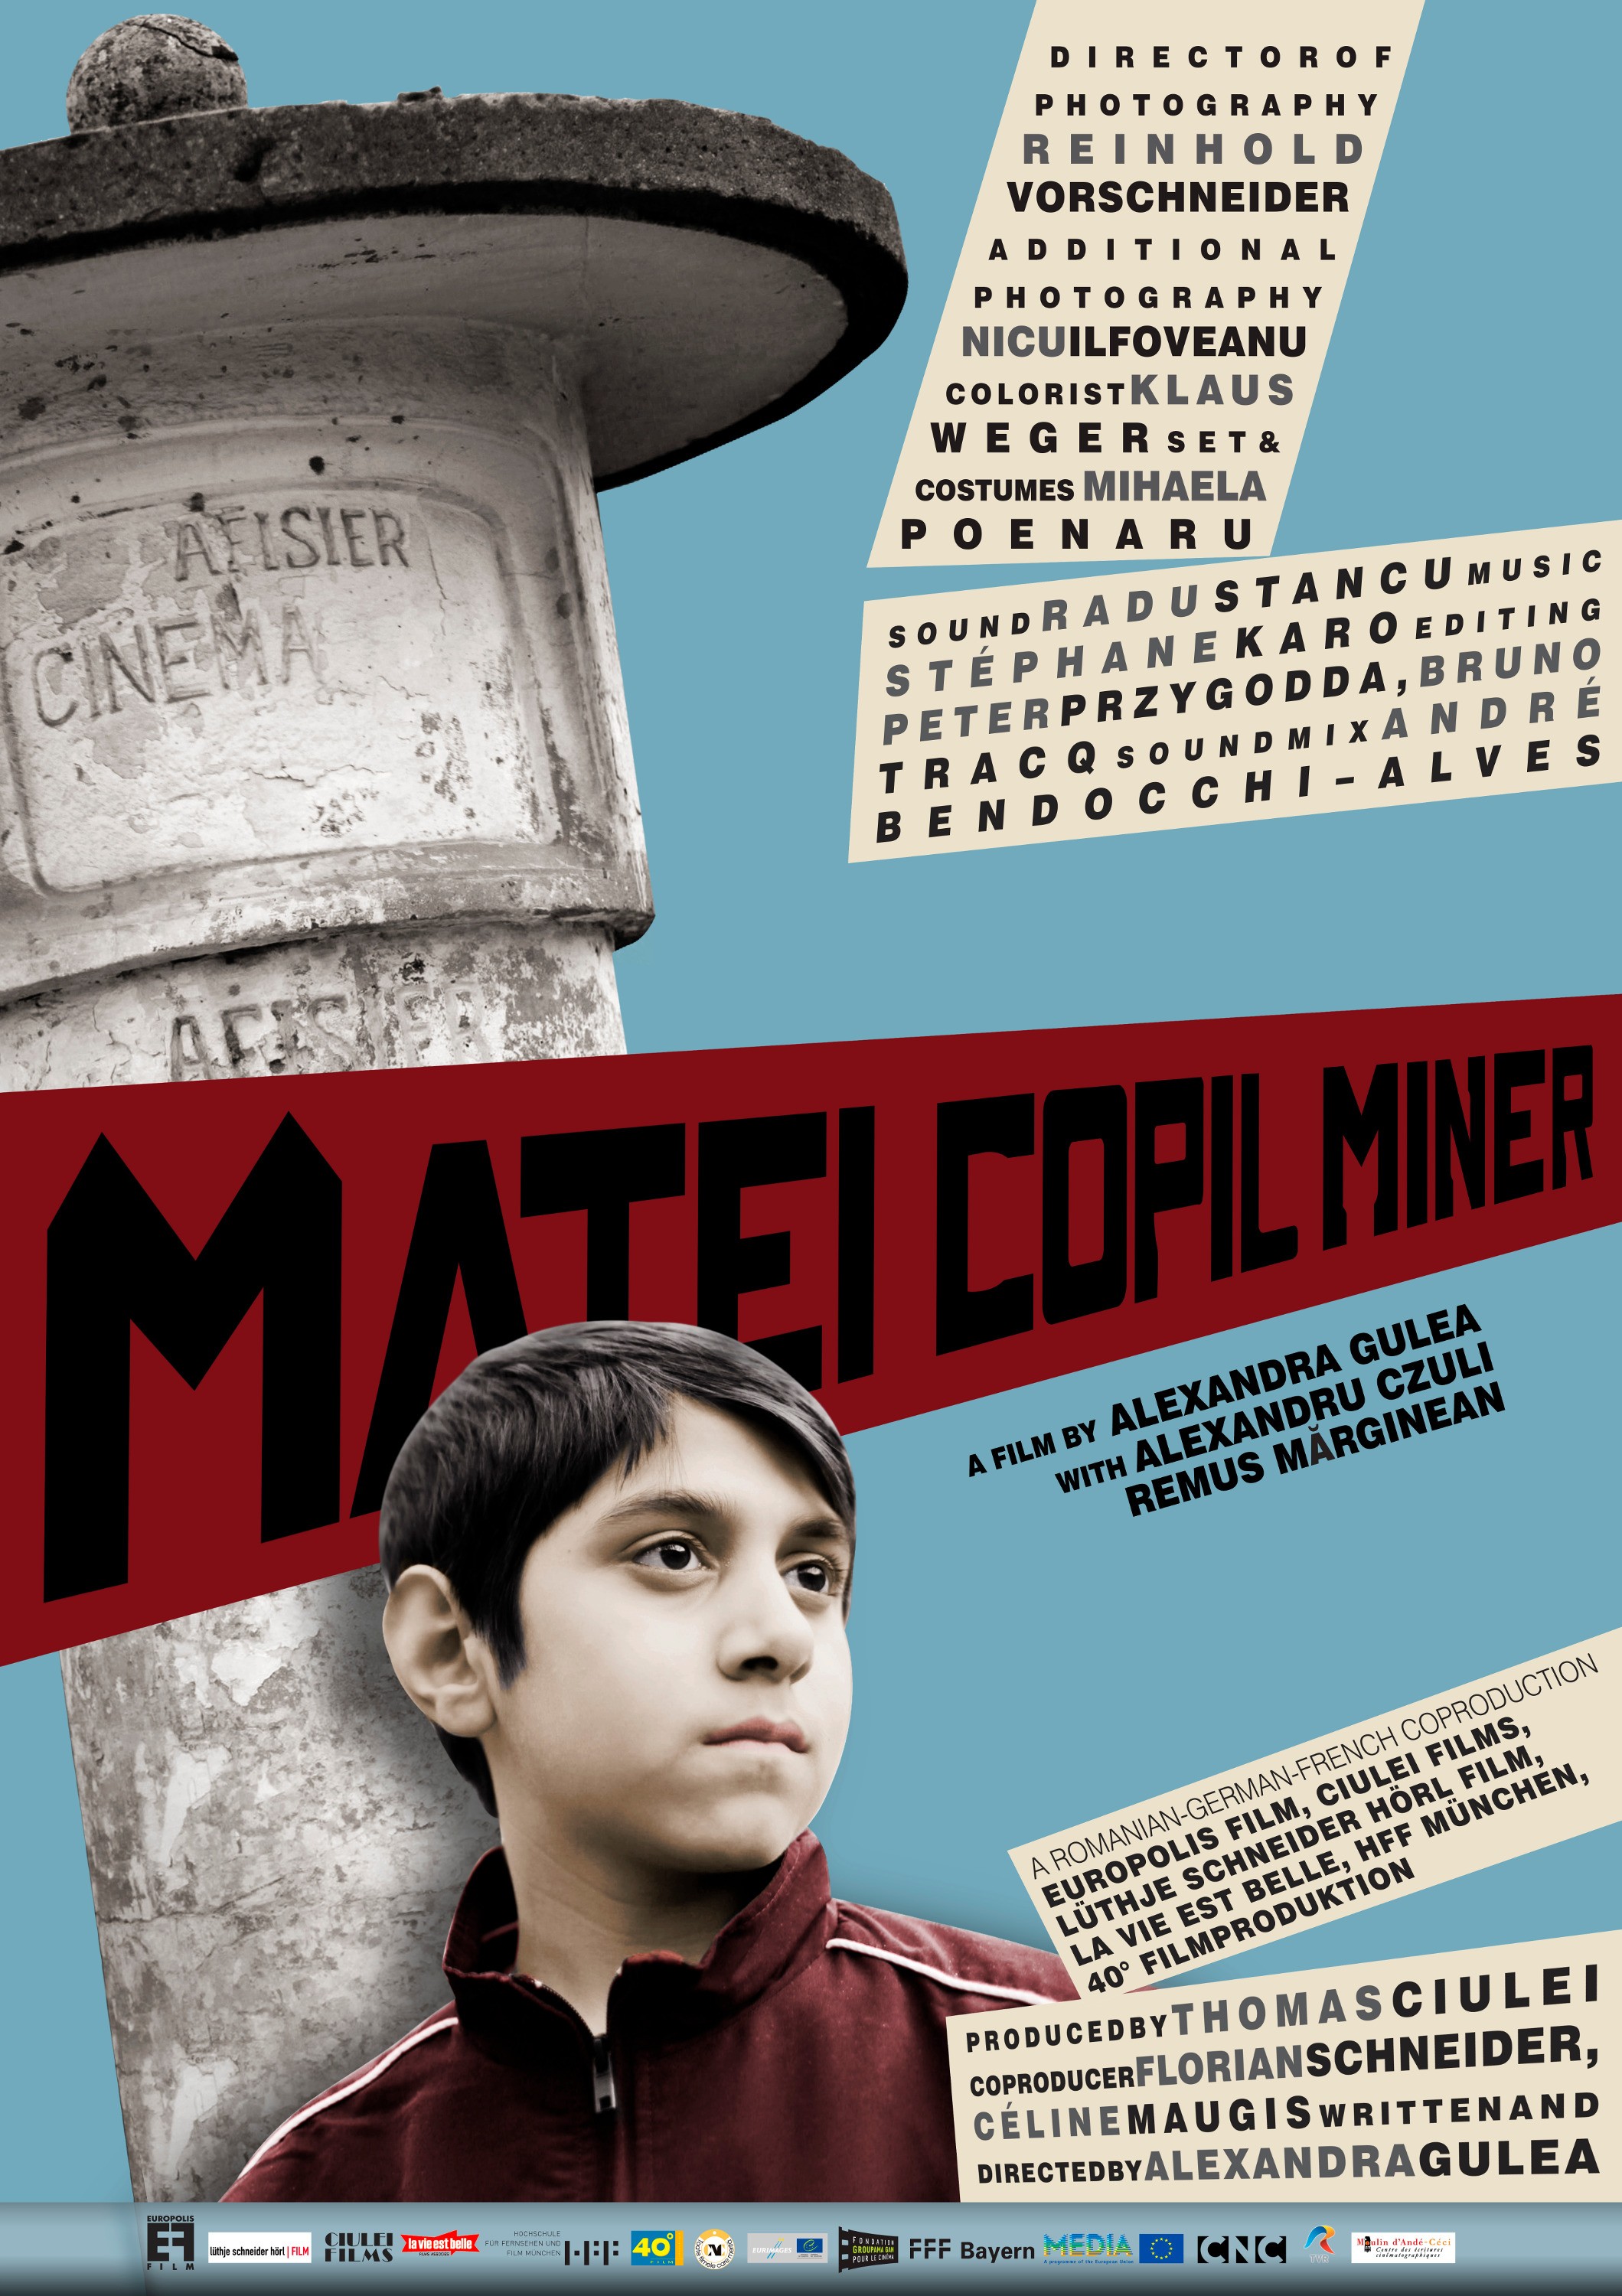 Mega Sized Movie Poster Image for Matei Copil Miner 